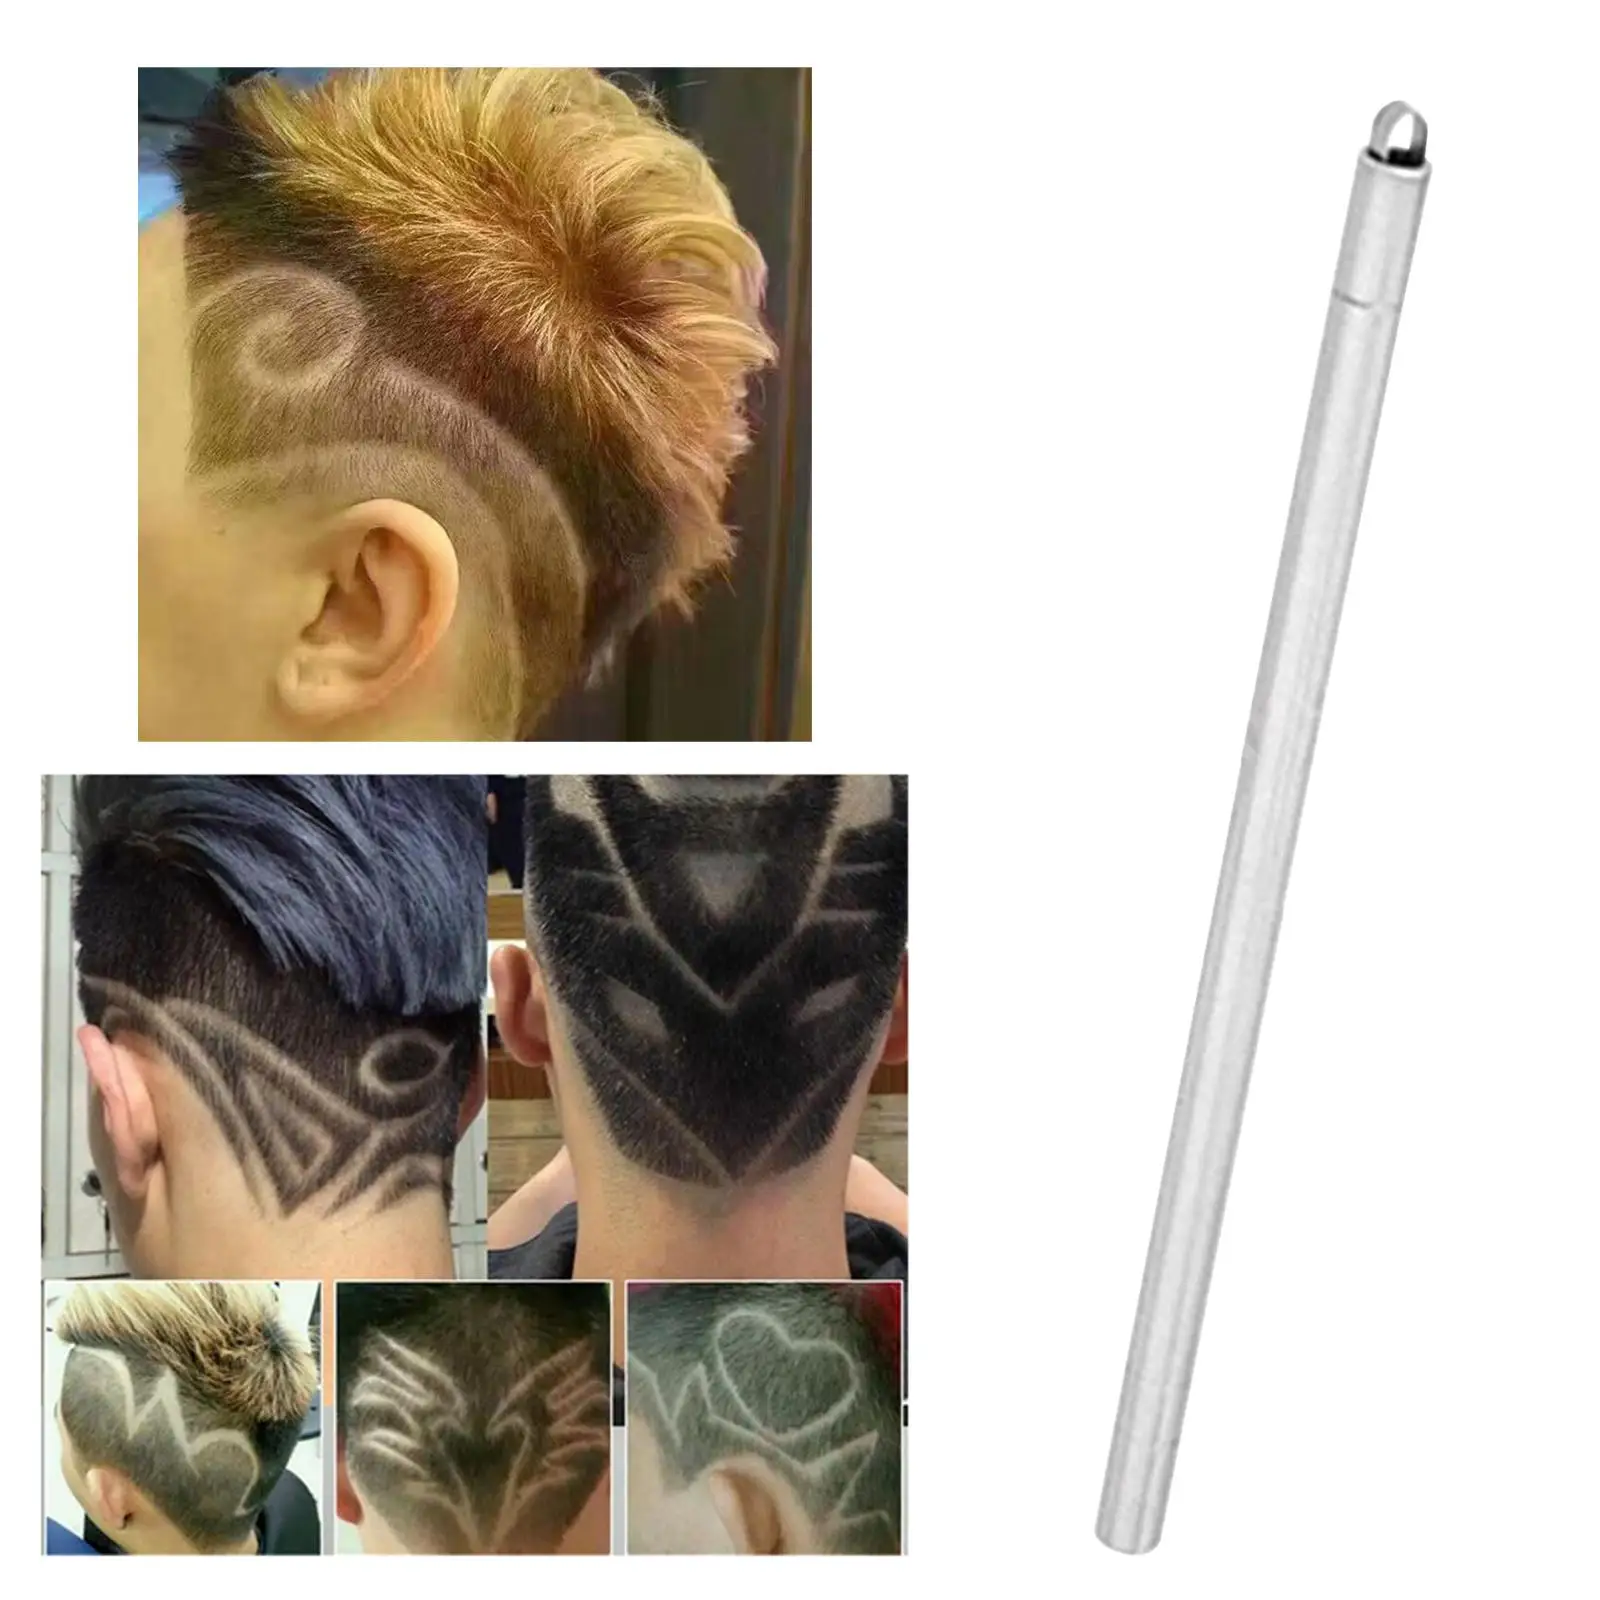 Hair Razor Pen Stainless Steel Styling Eyebrow Shaping Face Trim Hair Art Design Tattoos Engraving Pen Trimmer Shaving Tool